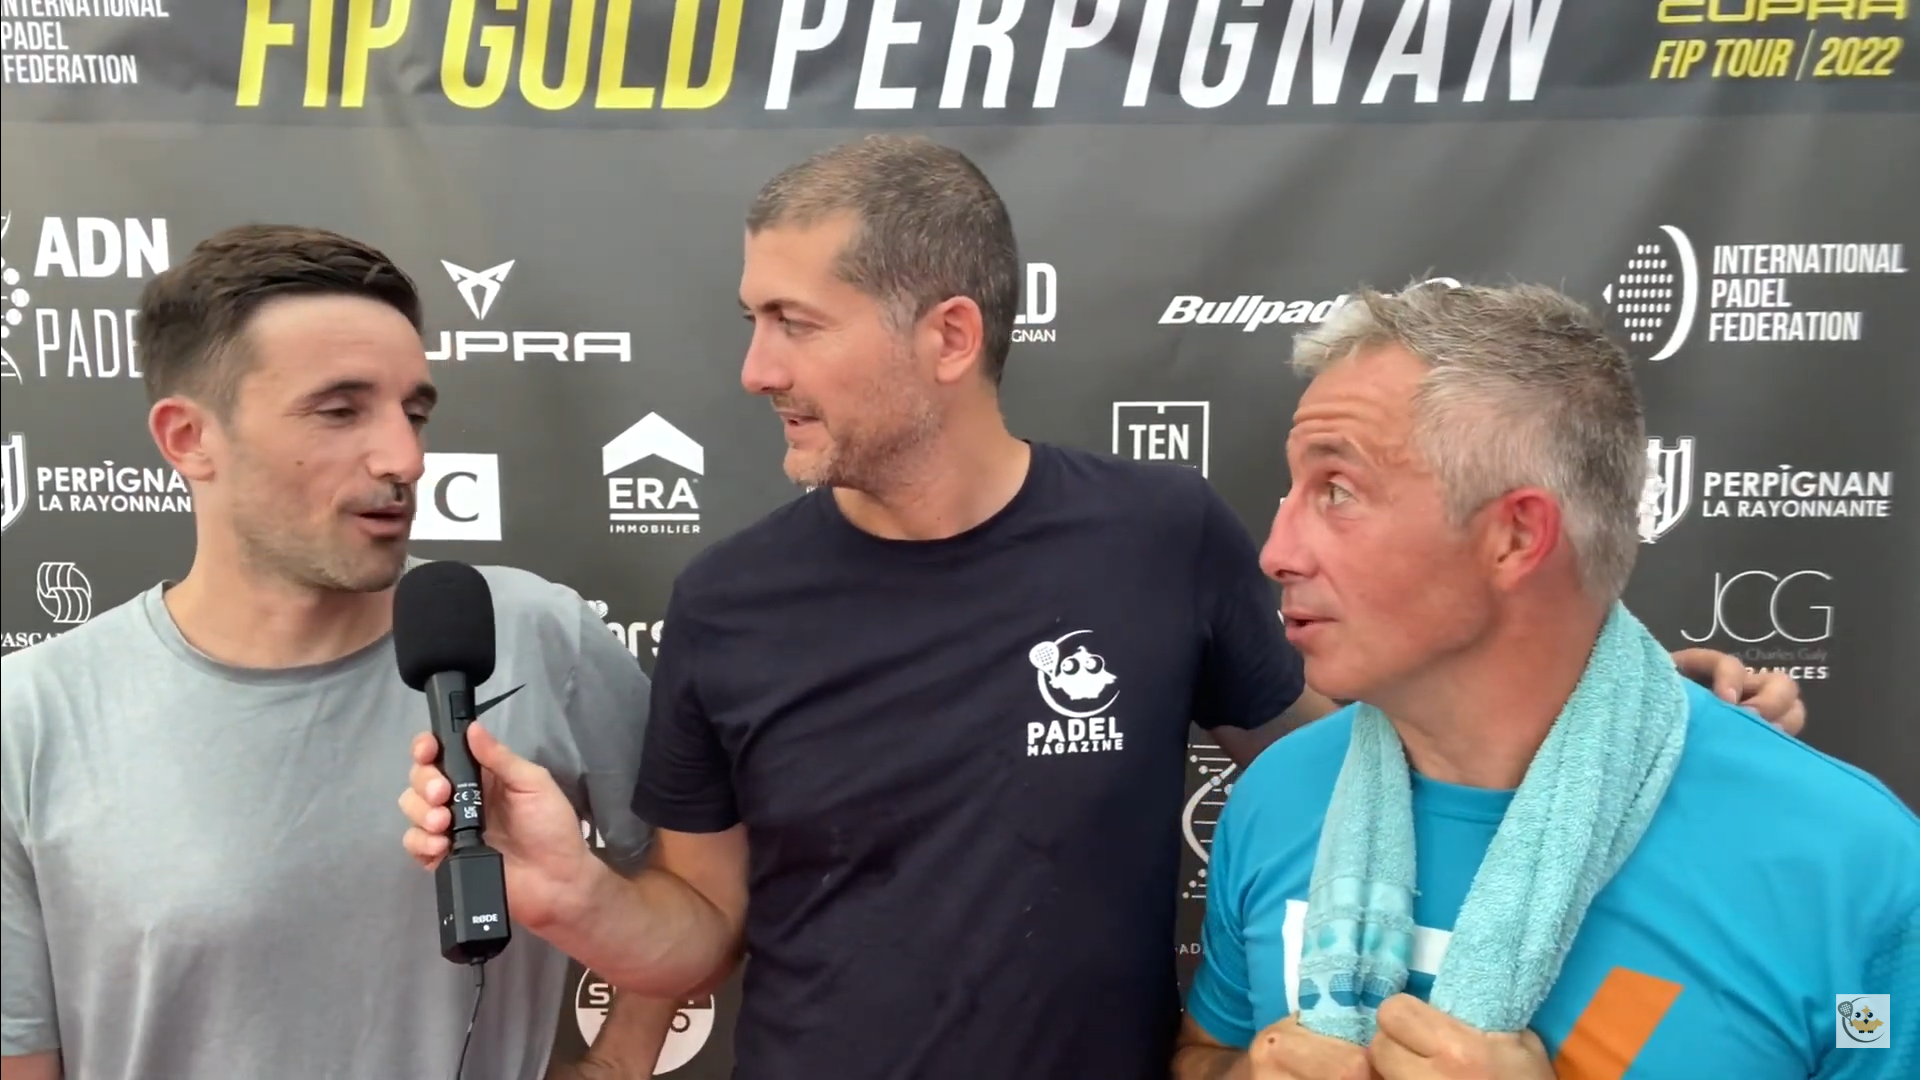 JP Pellicer y Dominique Campana Fip Gold Perpignan ITW